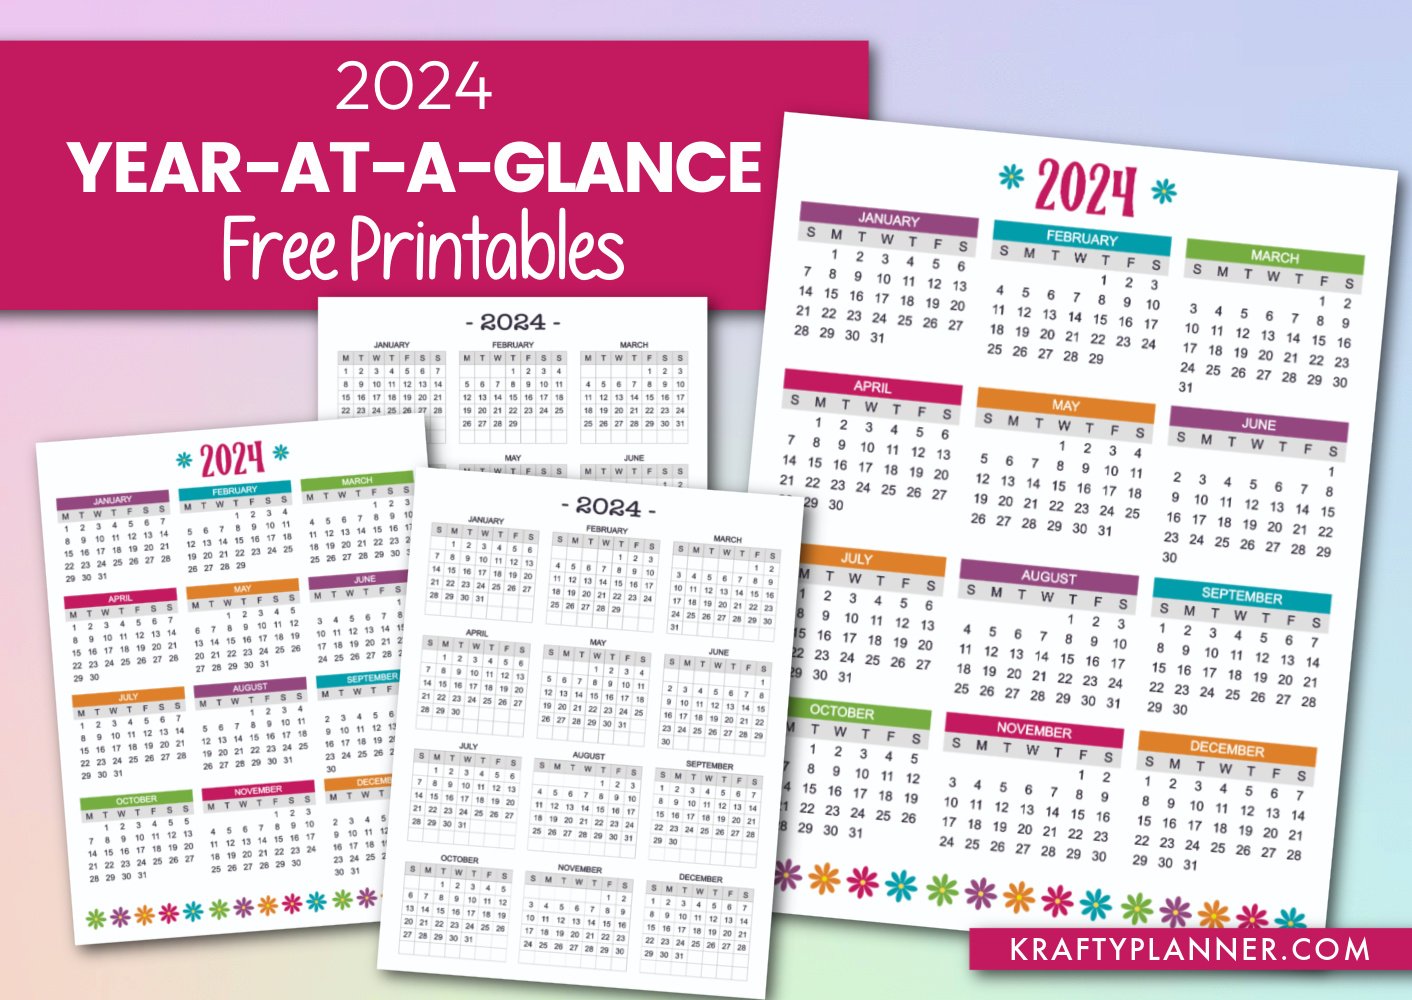 Free Printable 2024 Year-at-a-Glance Calendar